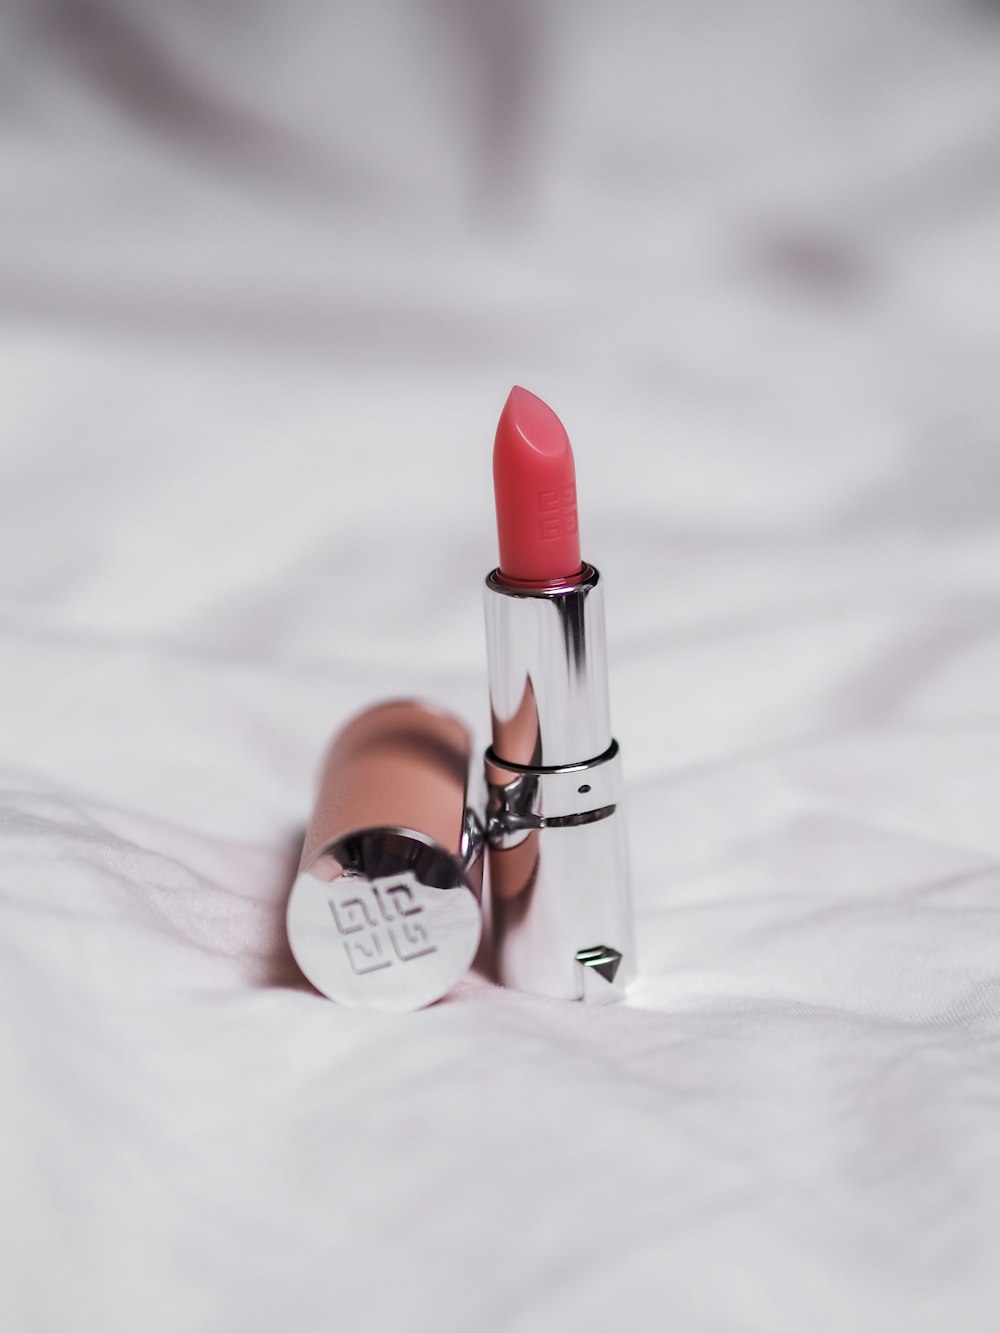 red lipstick on white textile